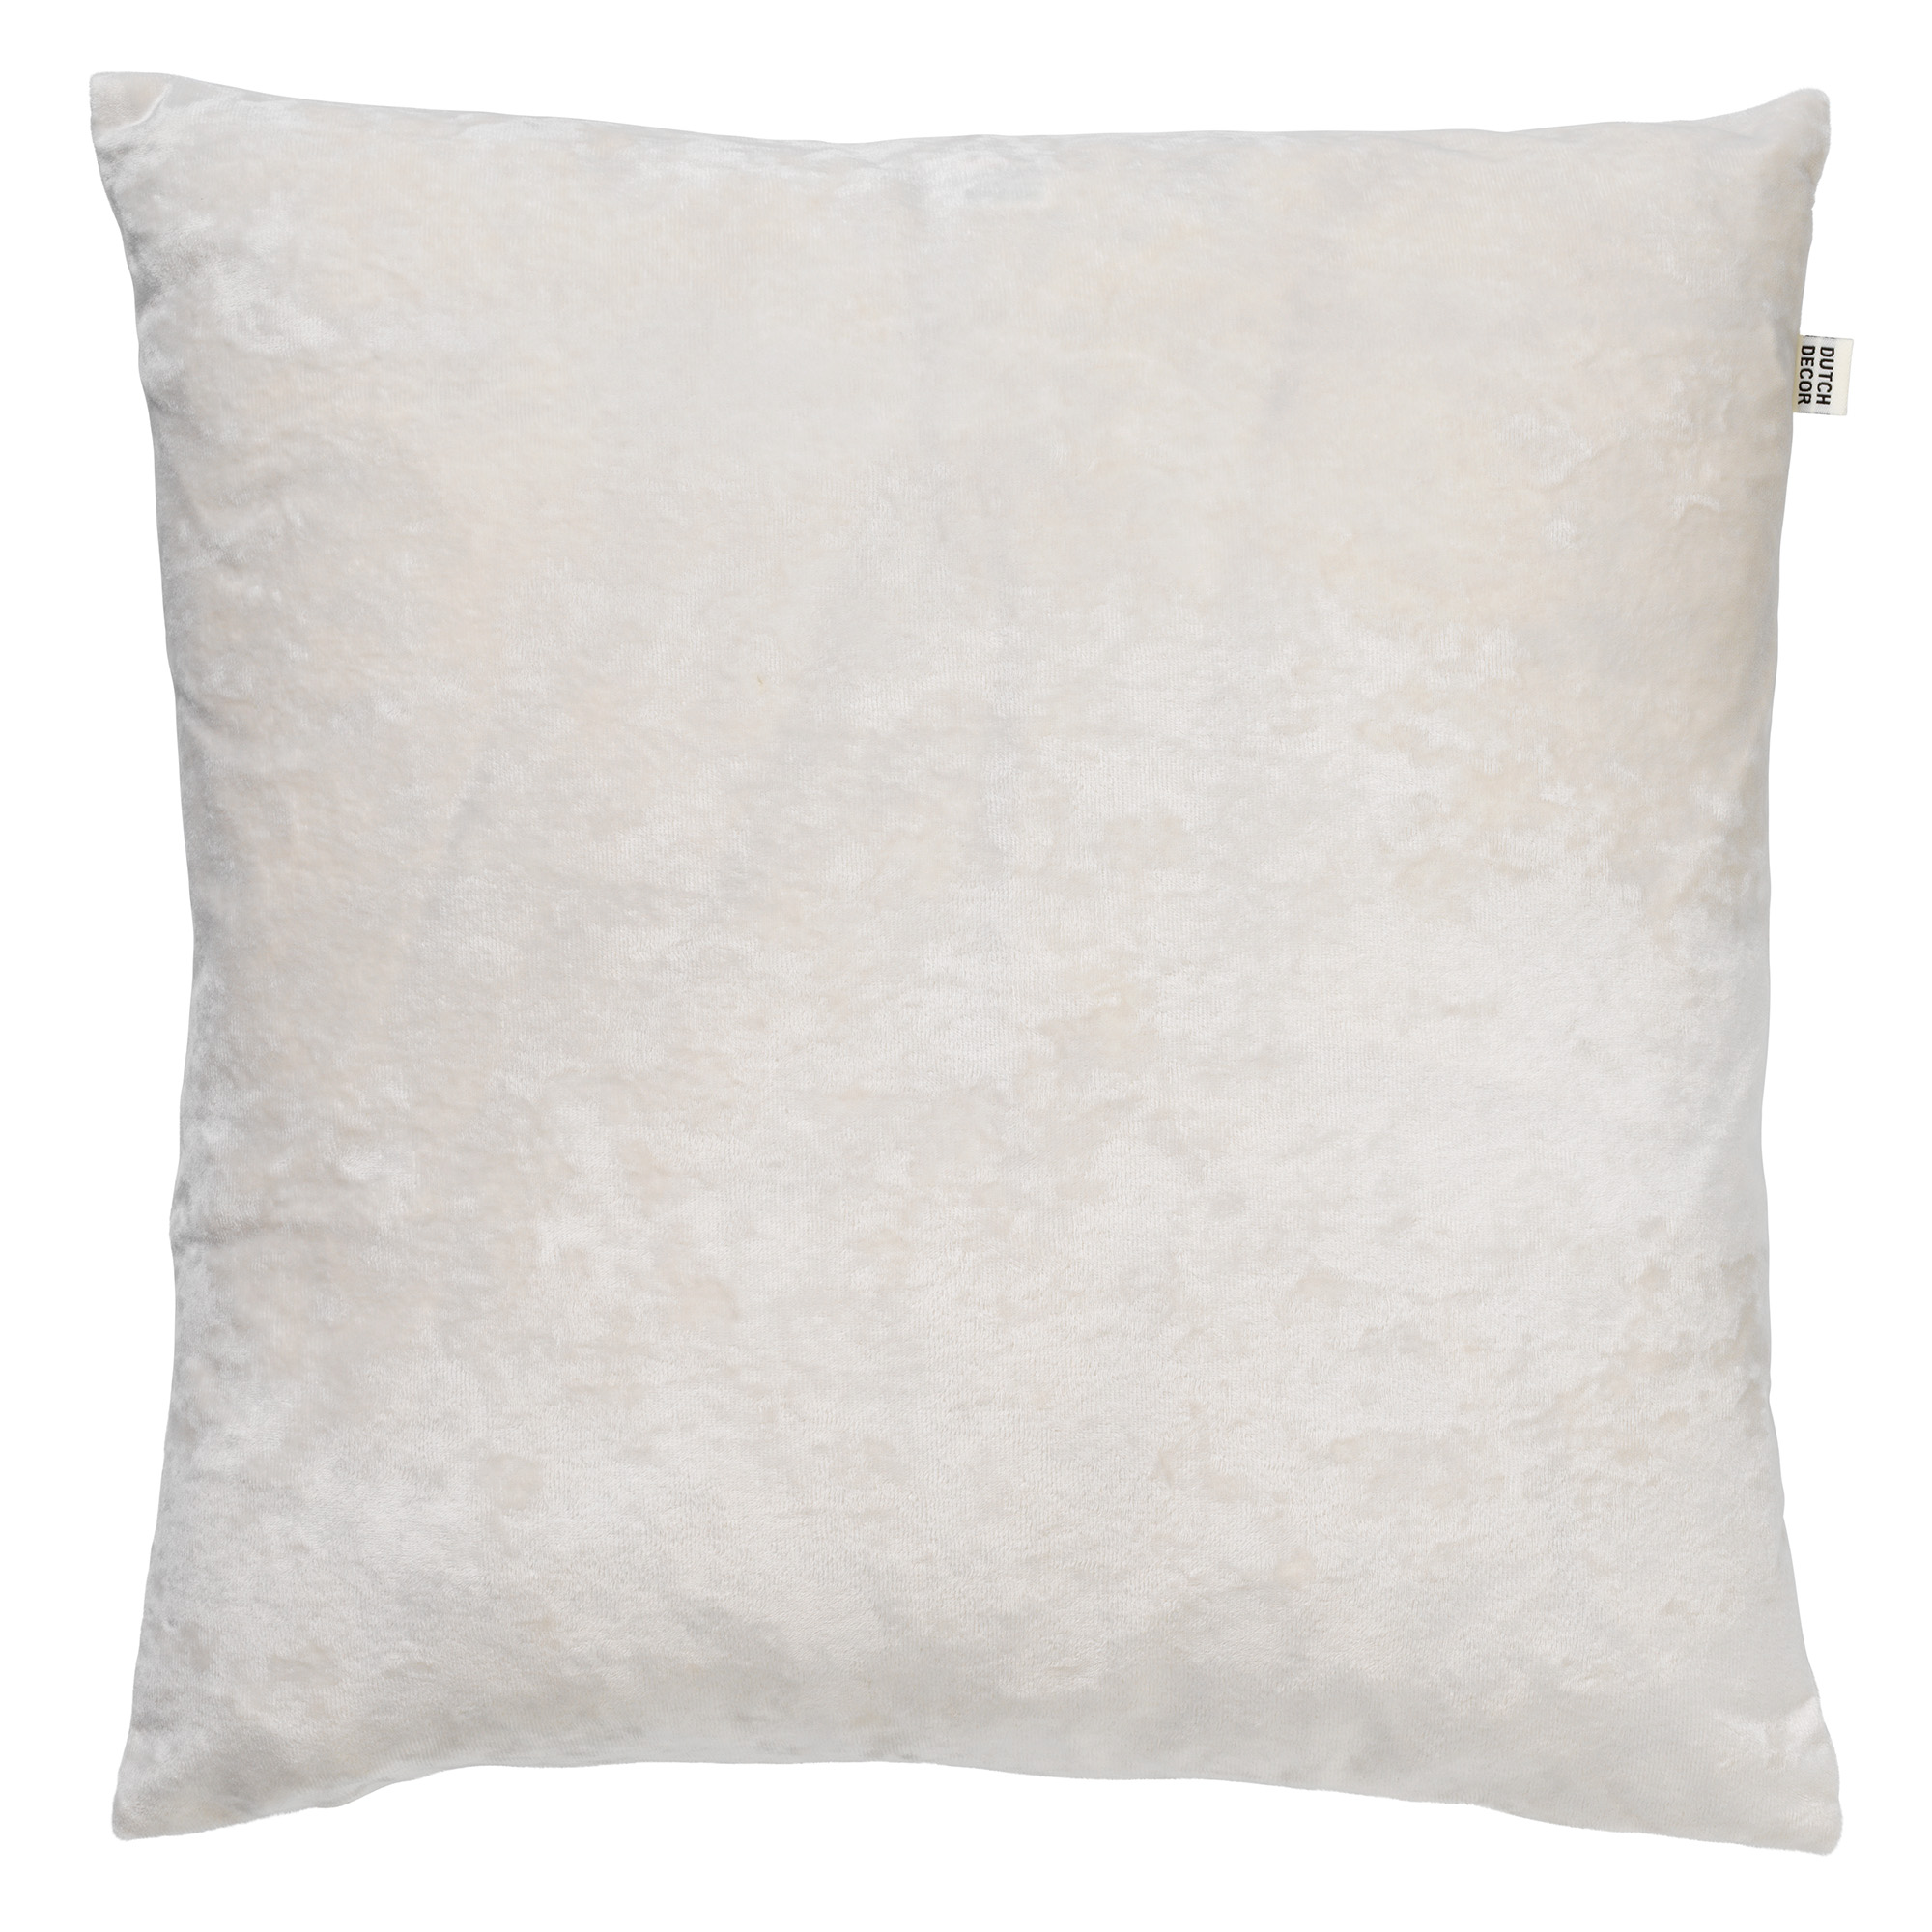 SKY - Cushion 45x45 cm Snow White - off-white